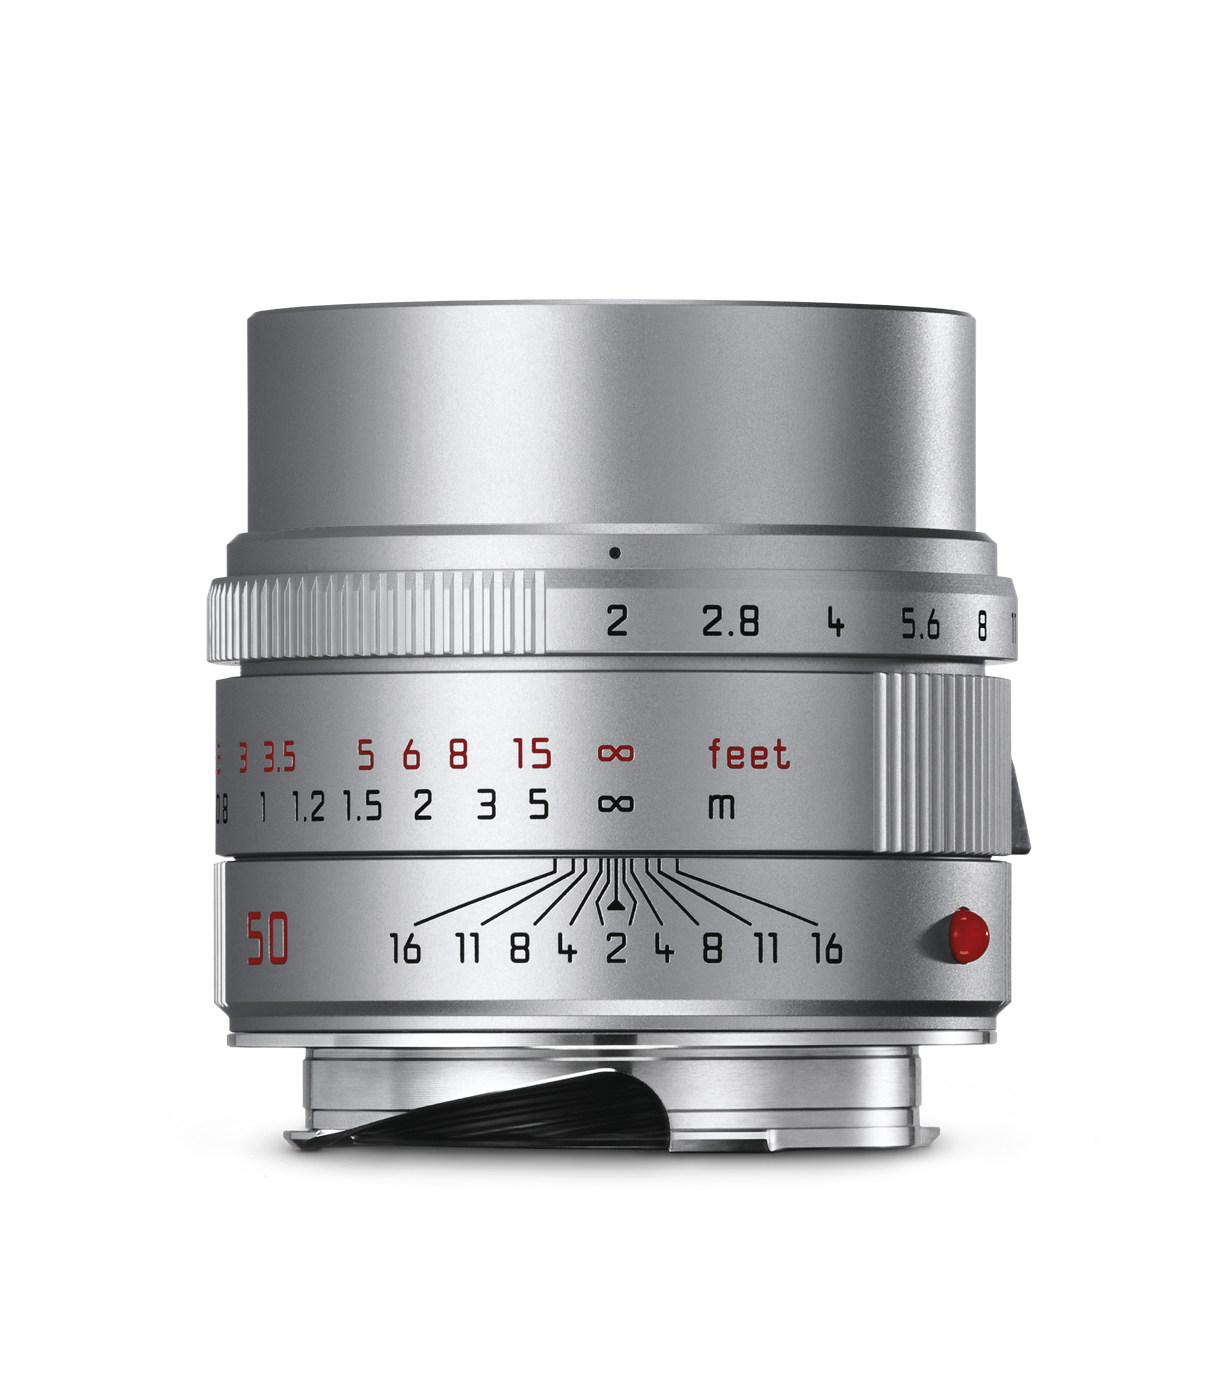 APO-Summicron-M 50mm f/2 ASPH., silver anodized | Leica Camera 